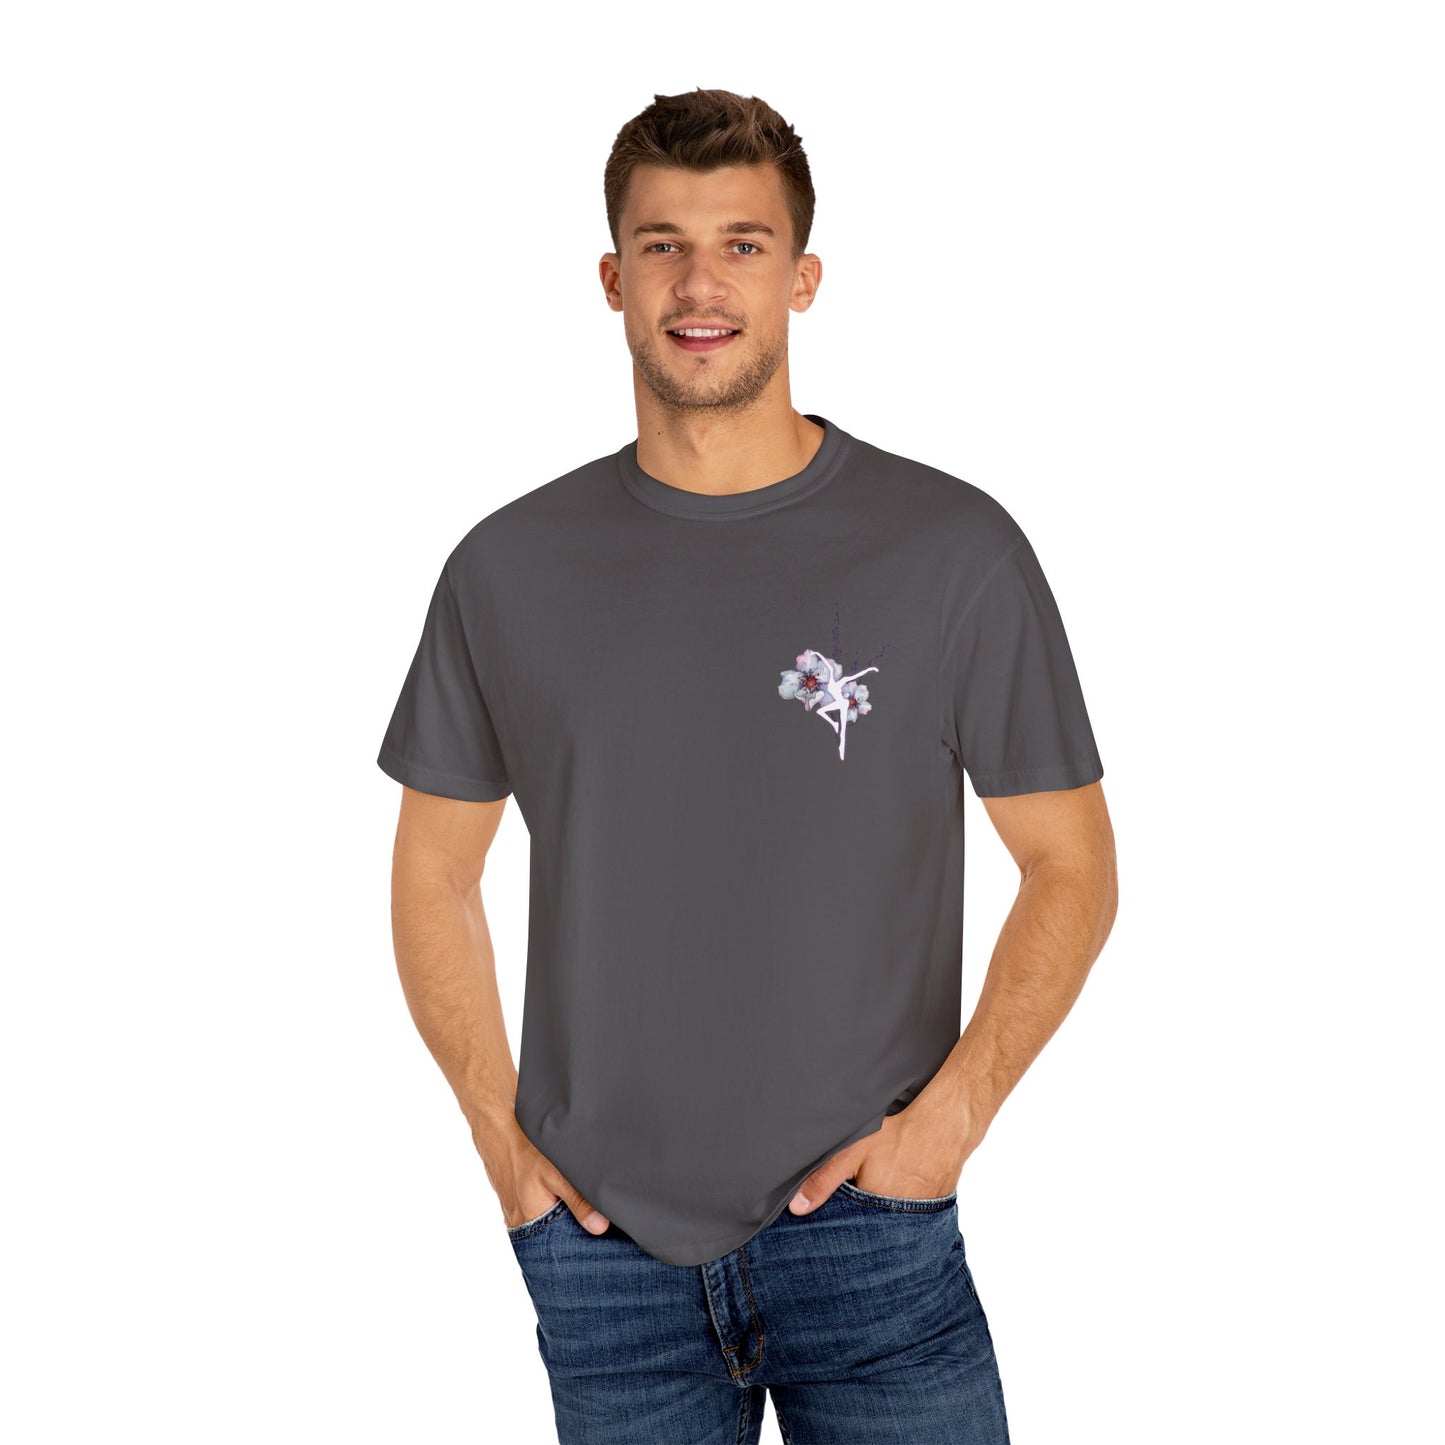 Unisex Garment-Dyed T-shirt - dmb - various designs